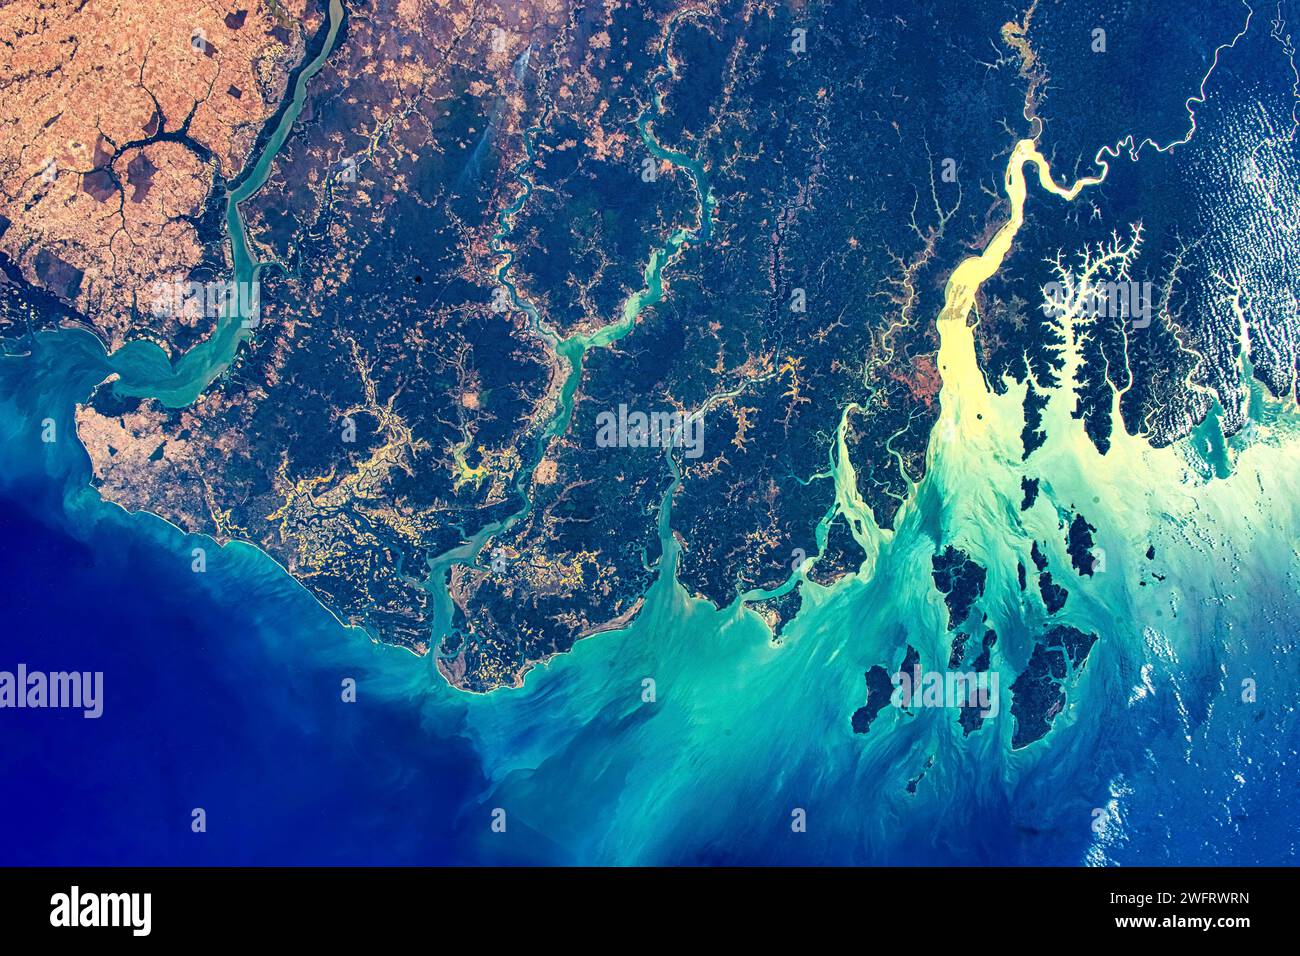 A coastline or coastal feature in Senegal. Digital enhancement of a NASA image. Stock Photo